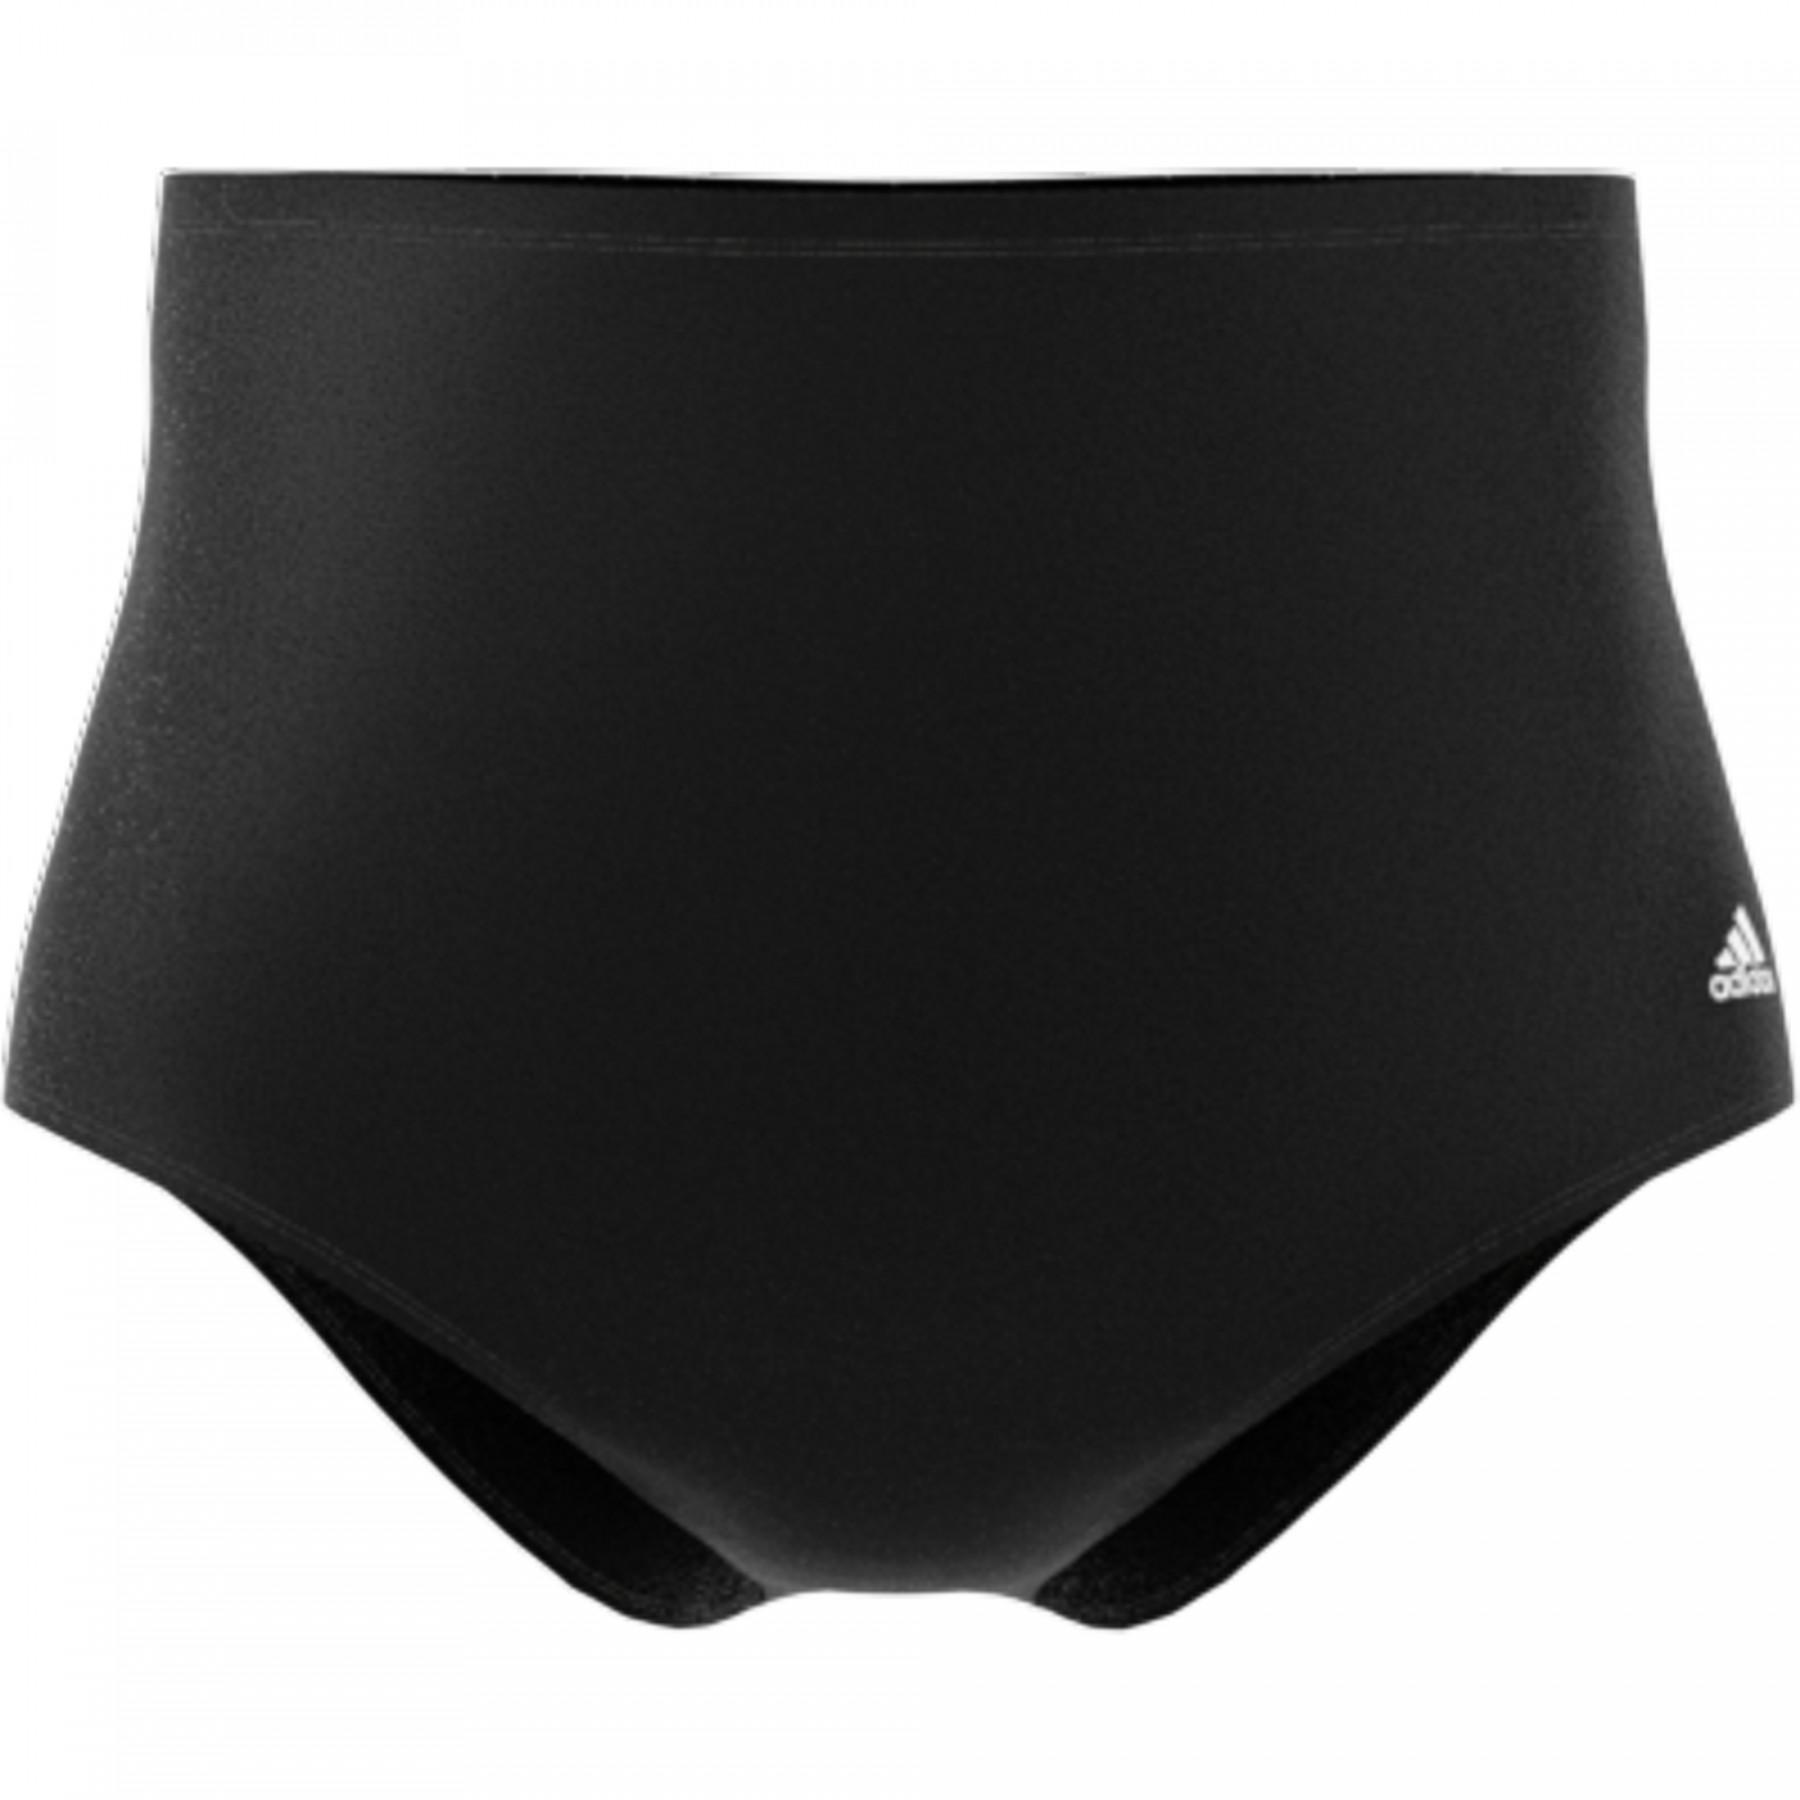 Women's bikini bottoms adidas SH3.RO Grande Taille